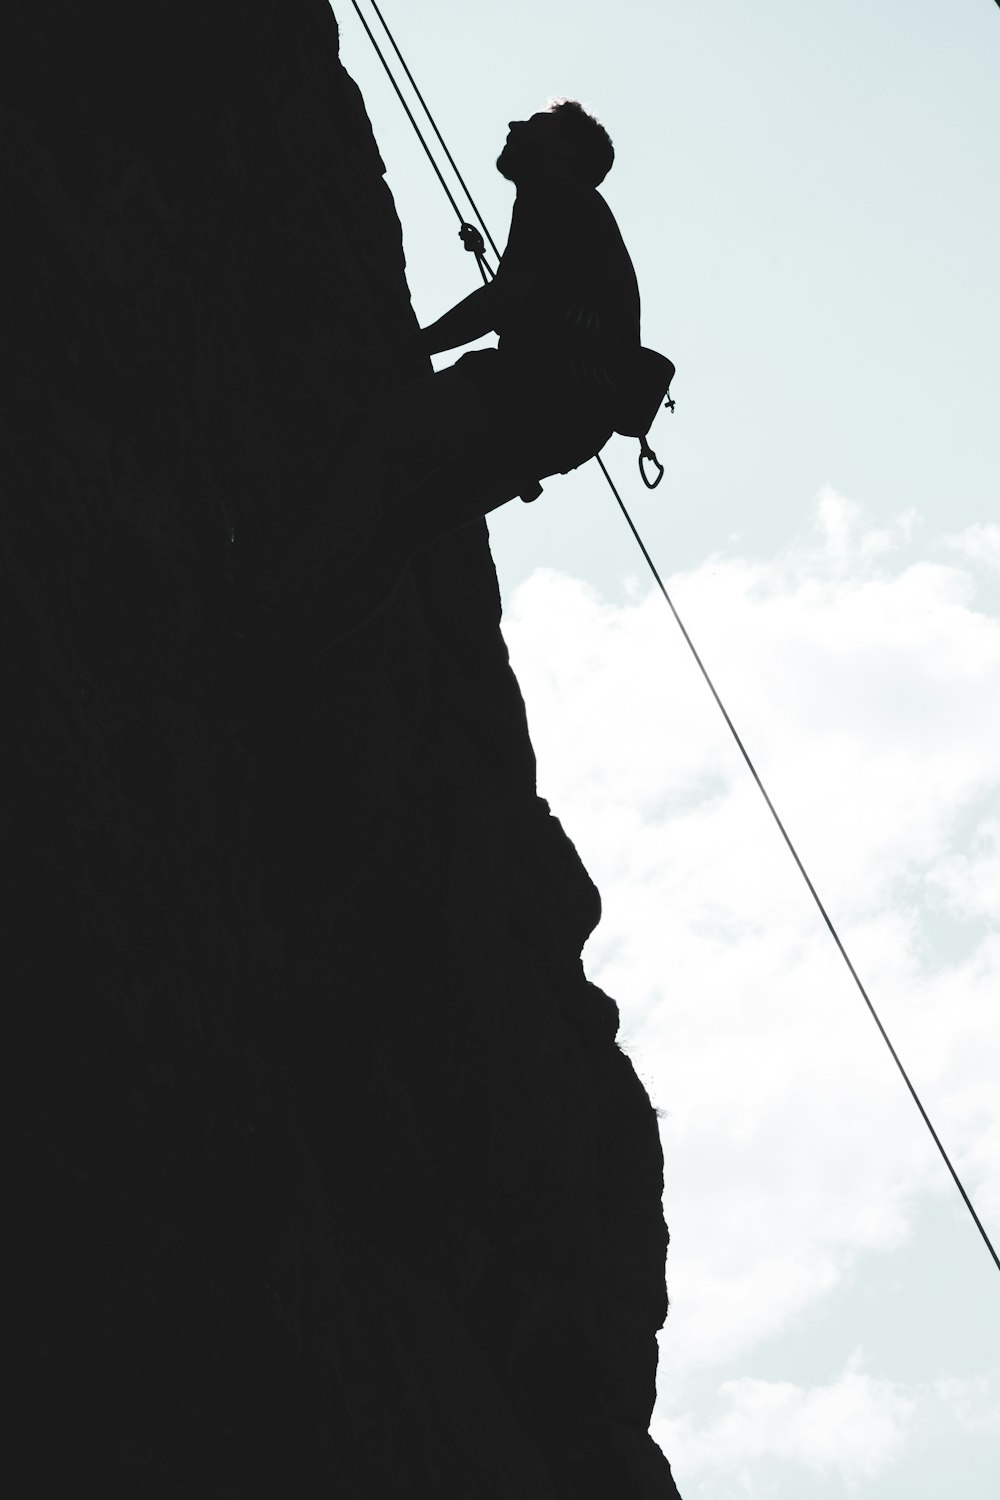 silhouette of man climbing on mountain during daytime